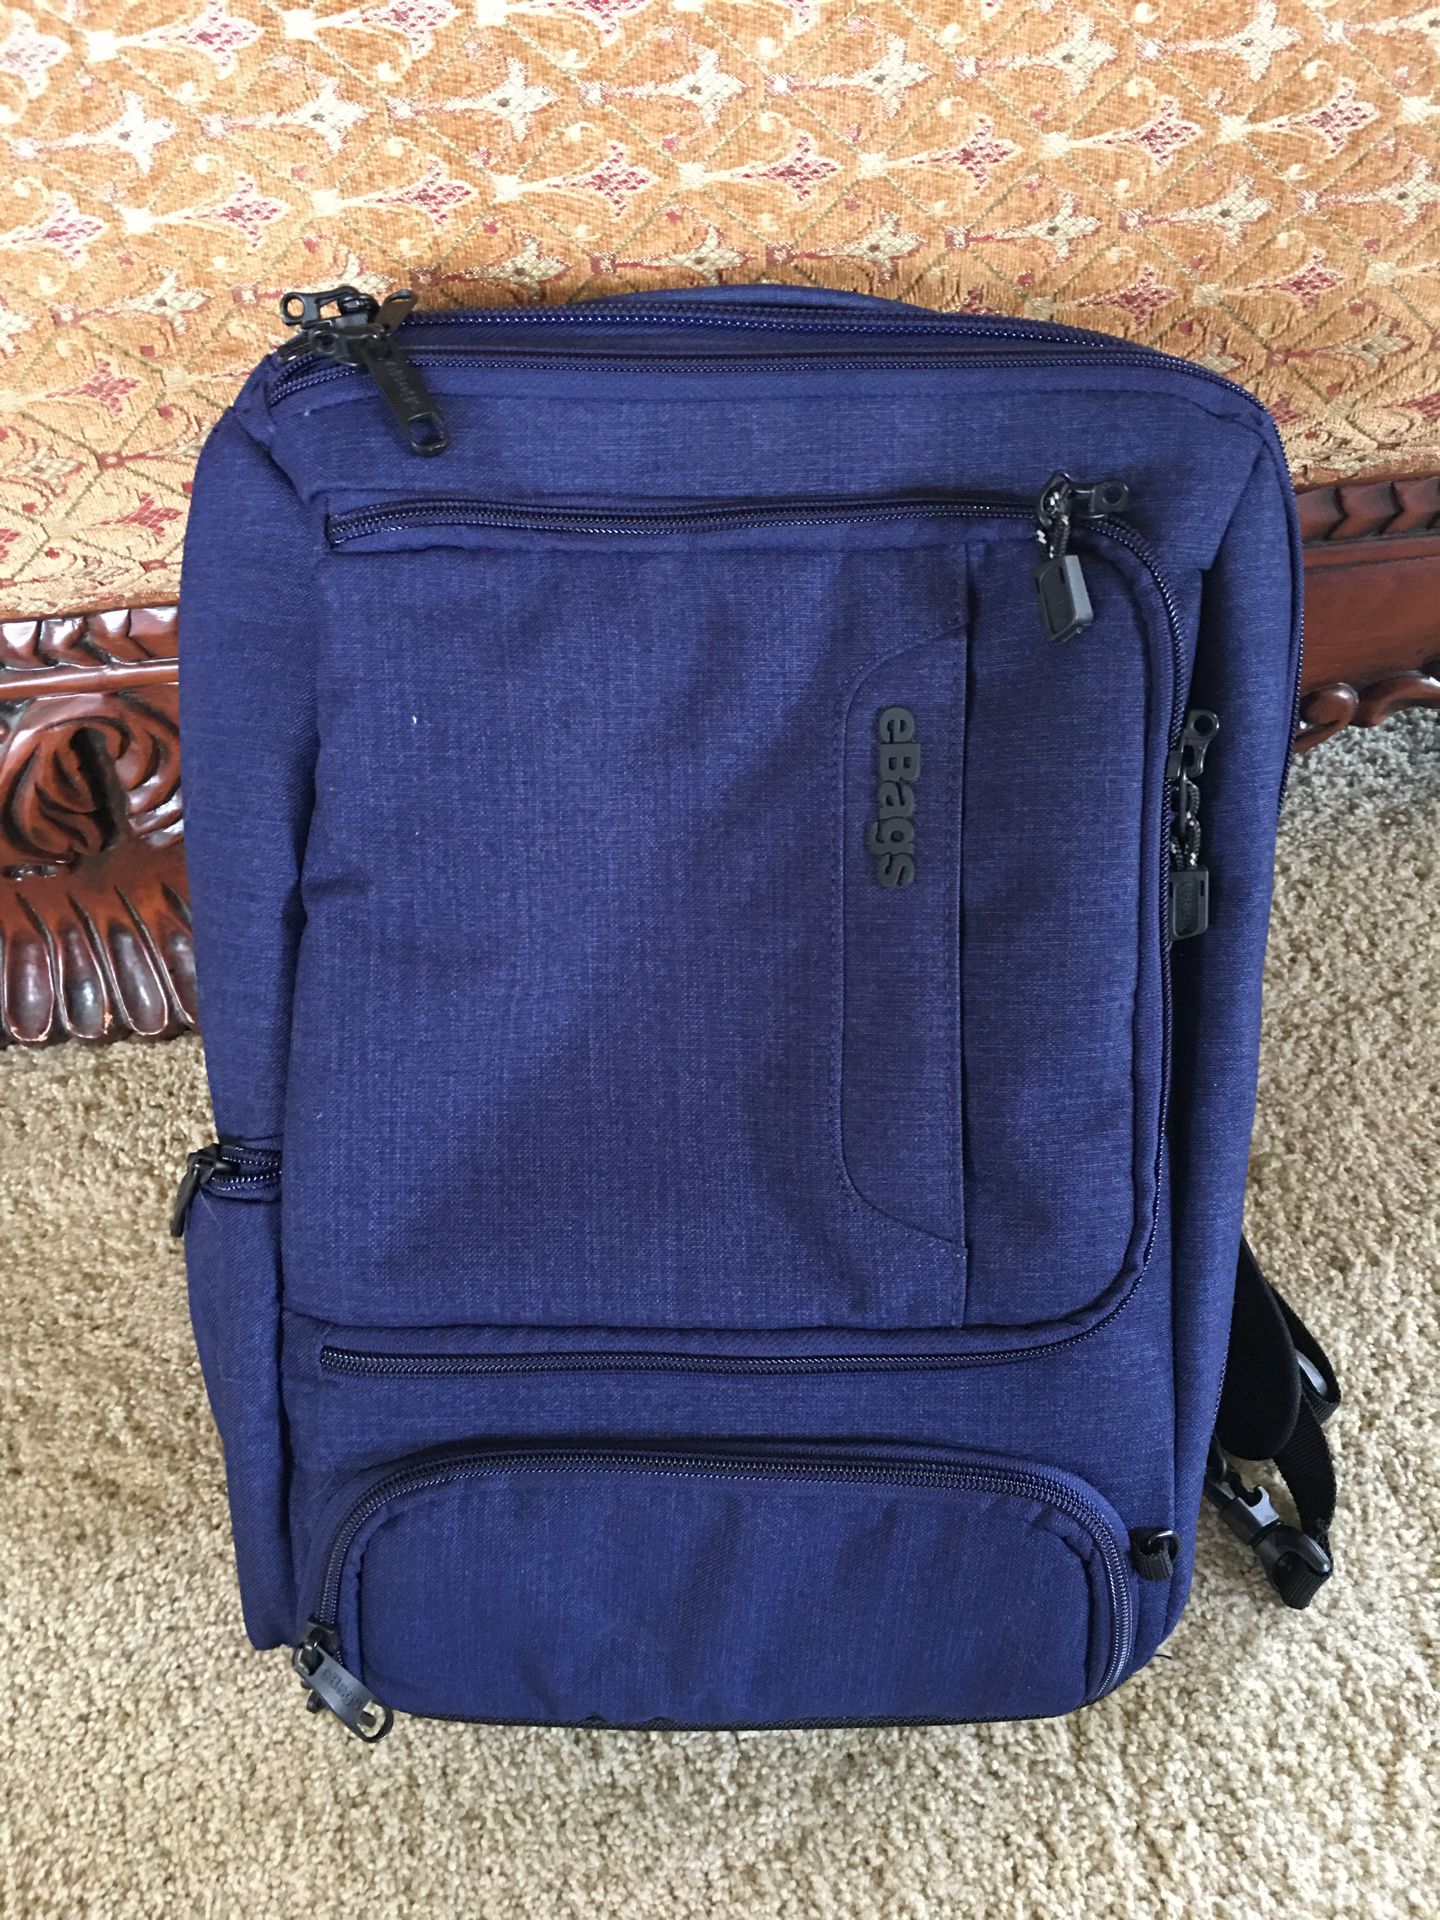 Ebags Laptop, iPad backpack NEW $30